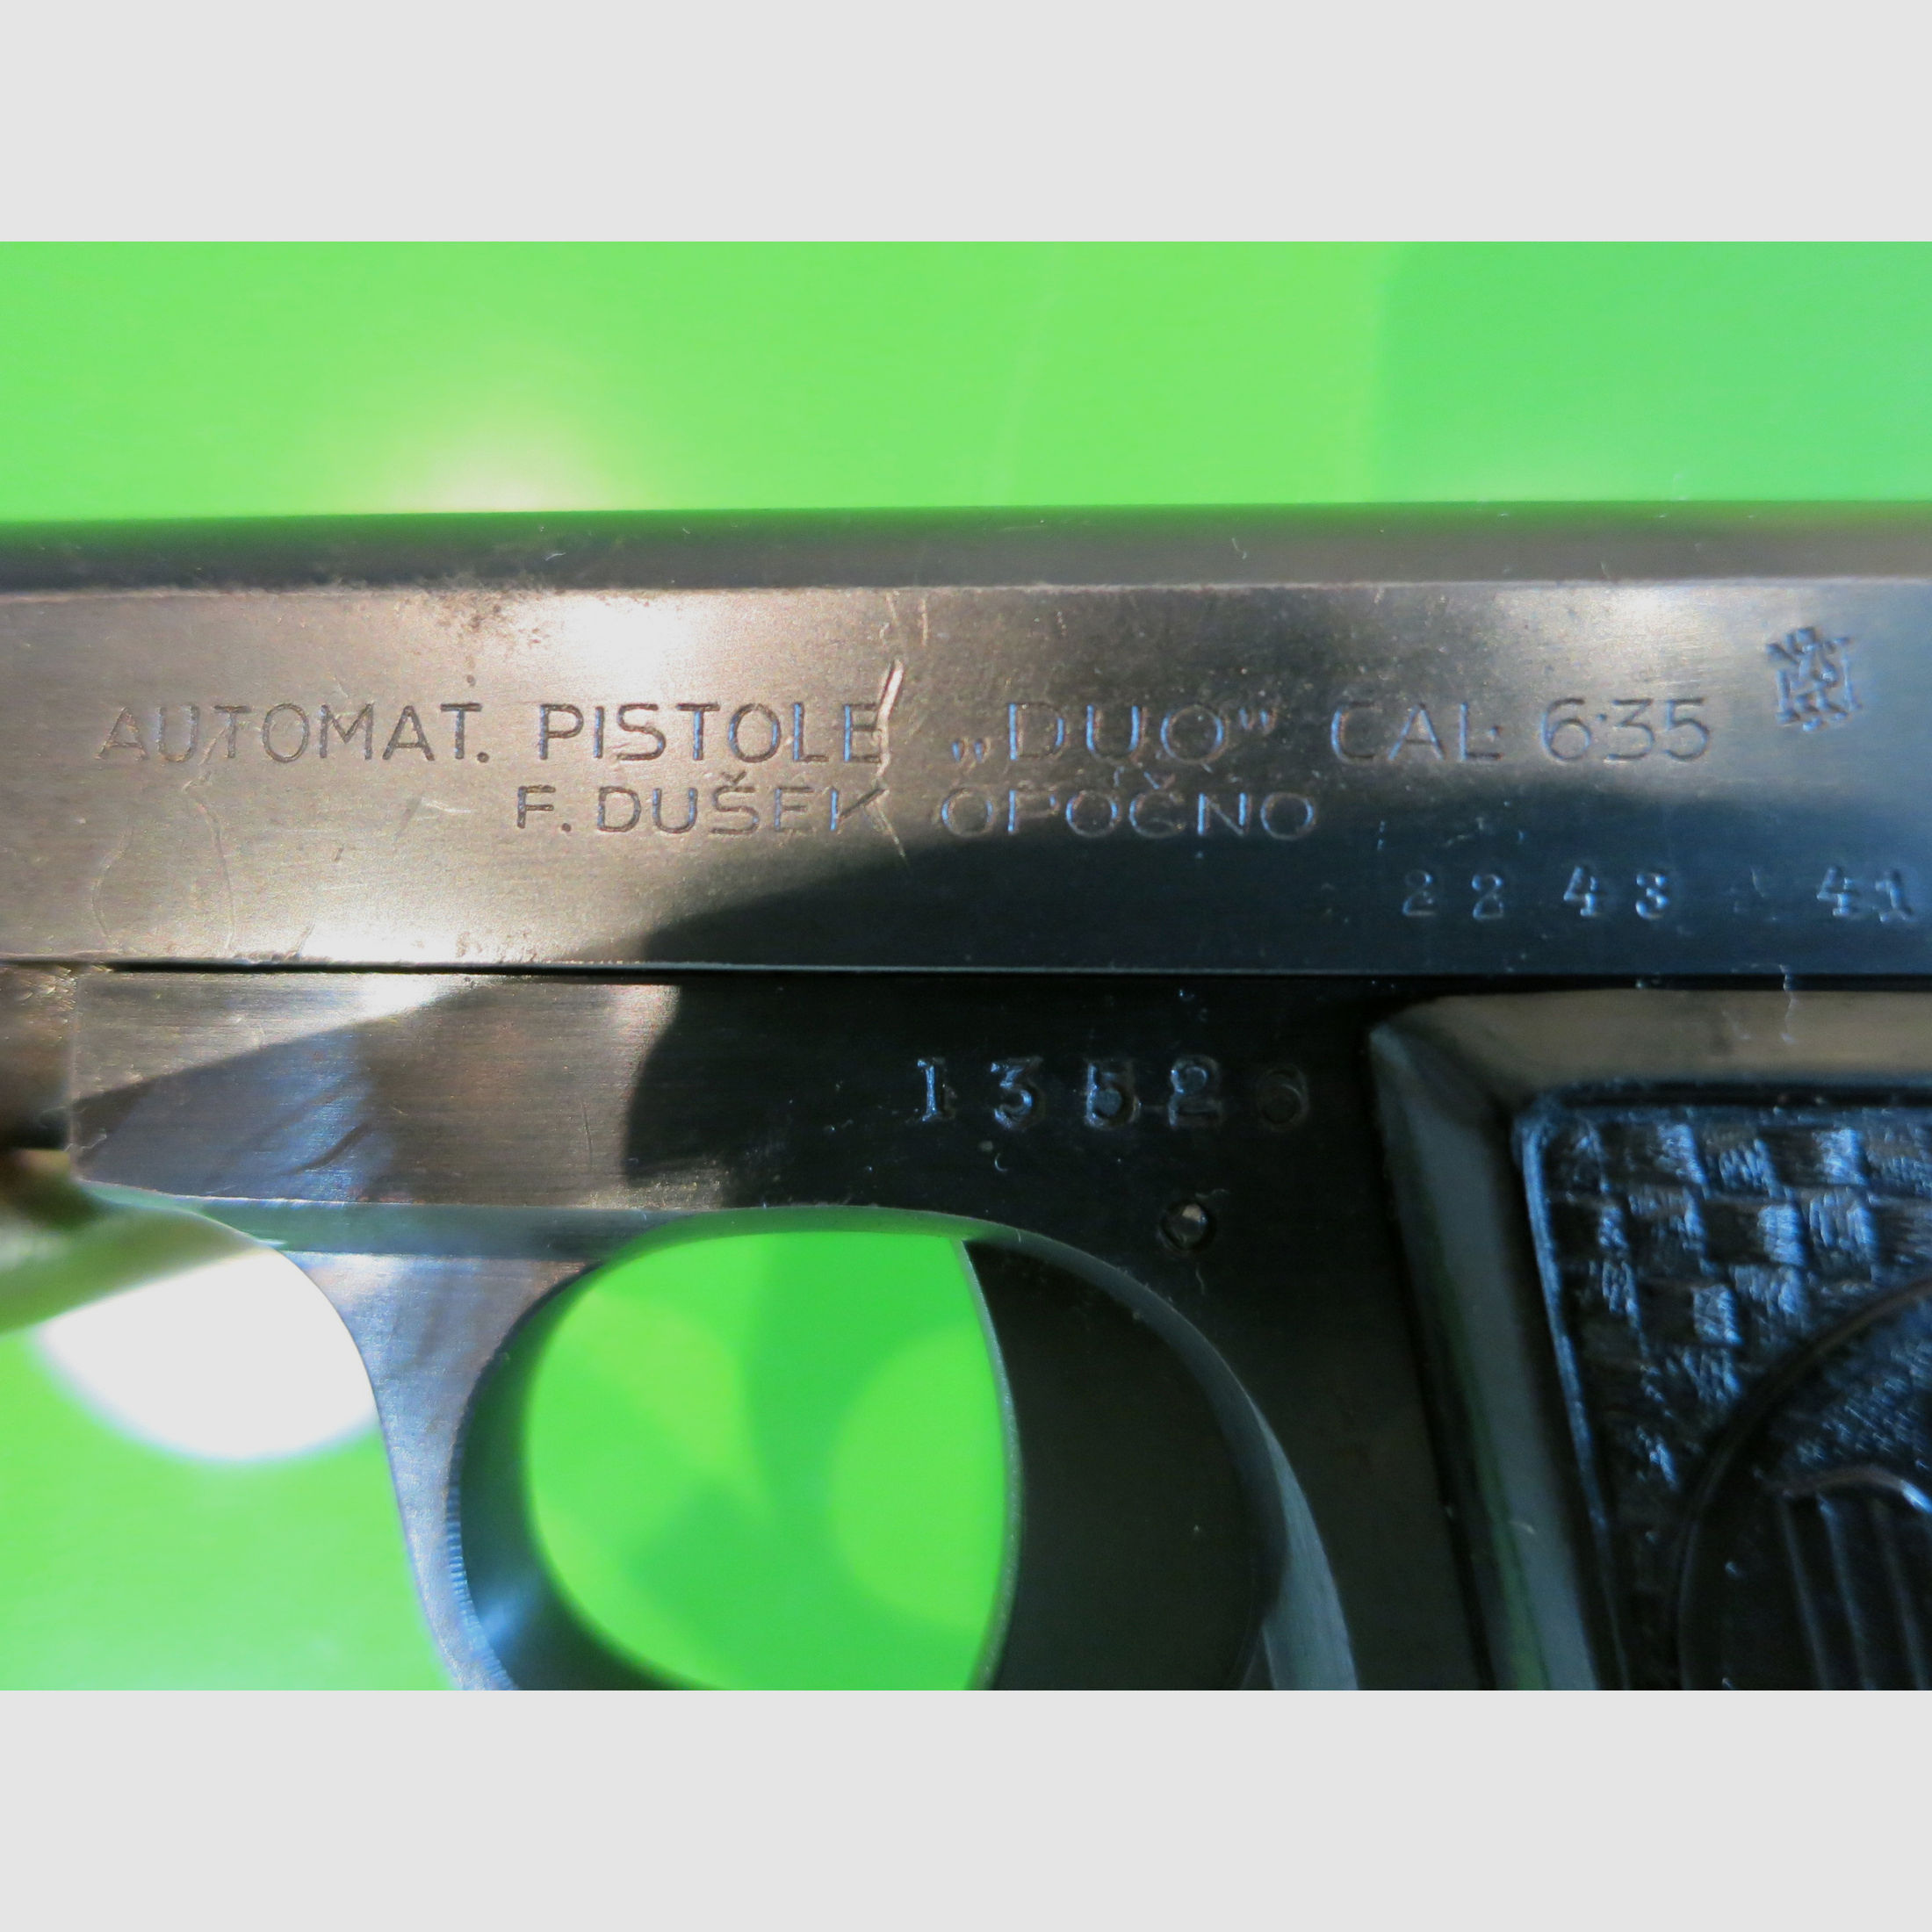 Halbautomatische Pistole, CZ Brünner Waffenwerke - F. Dusek DUO 6,35 mm (Pistole Z),  6,35mm Browning       #42